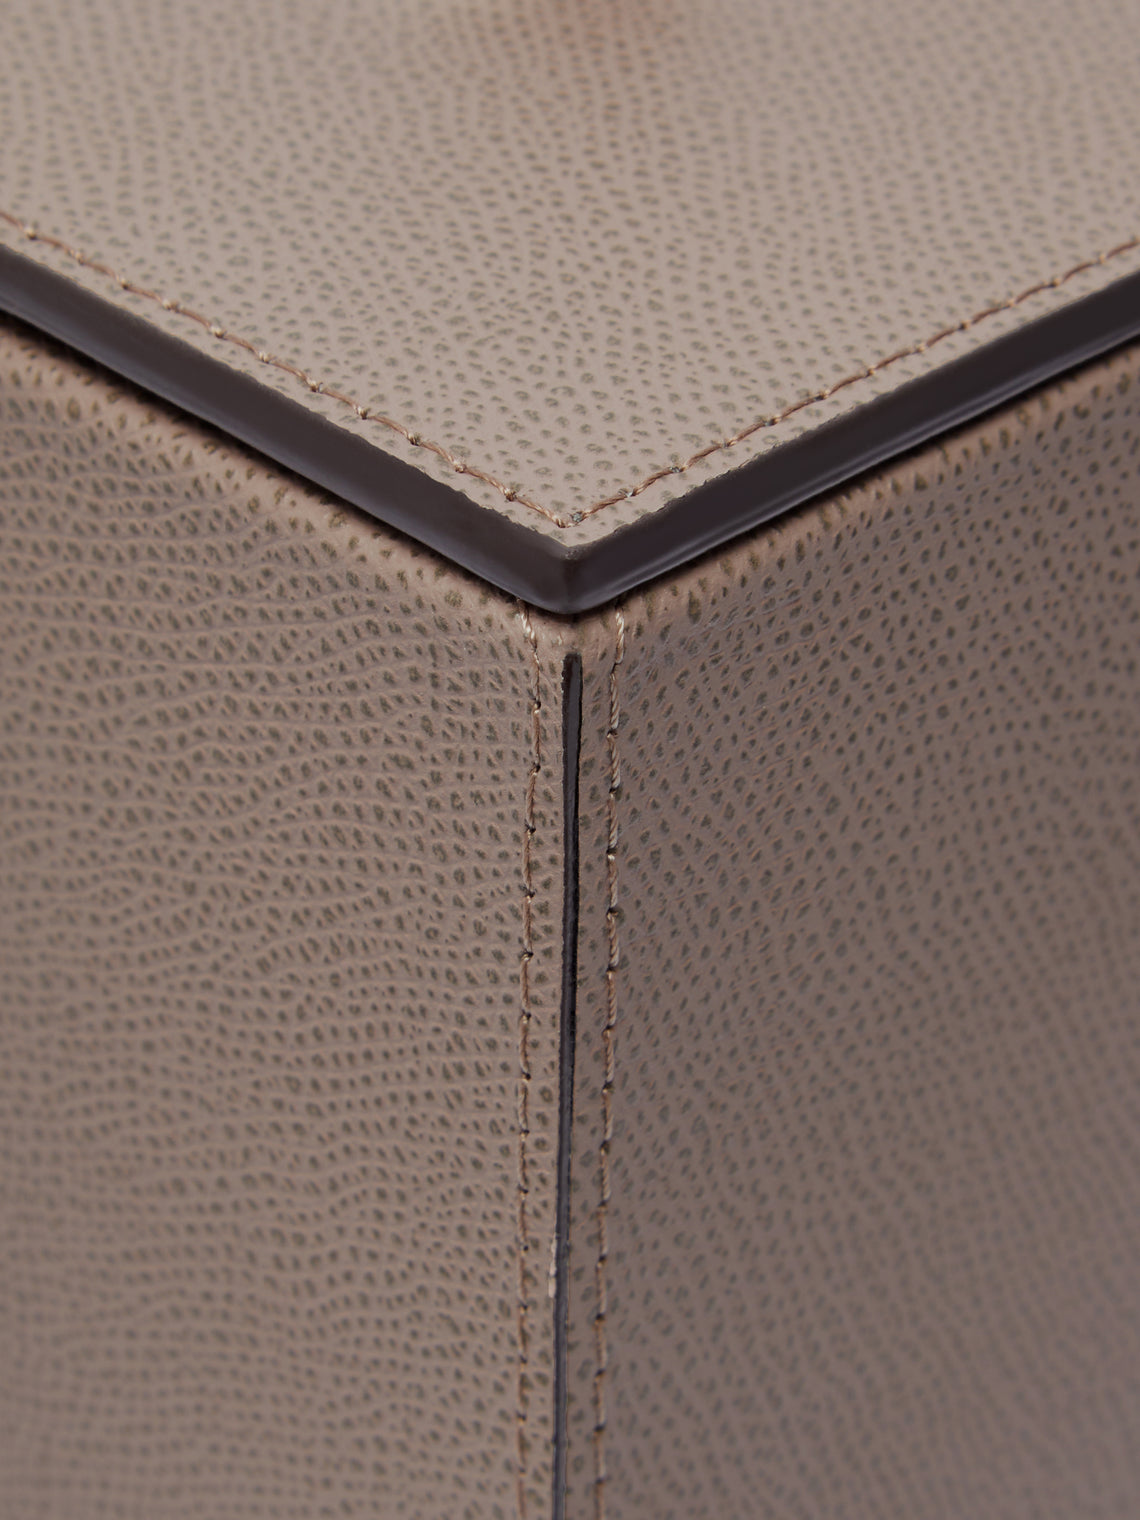 Giobagnara - Firenze Leather Manicure Set -  - ABASK